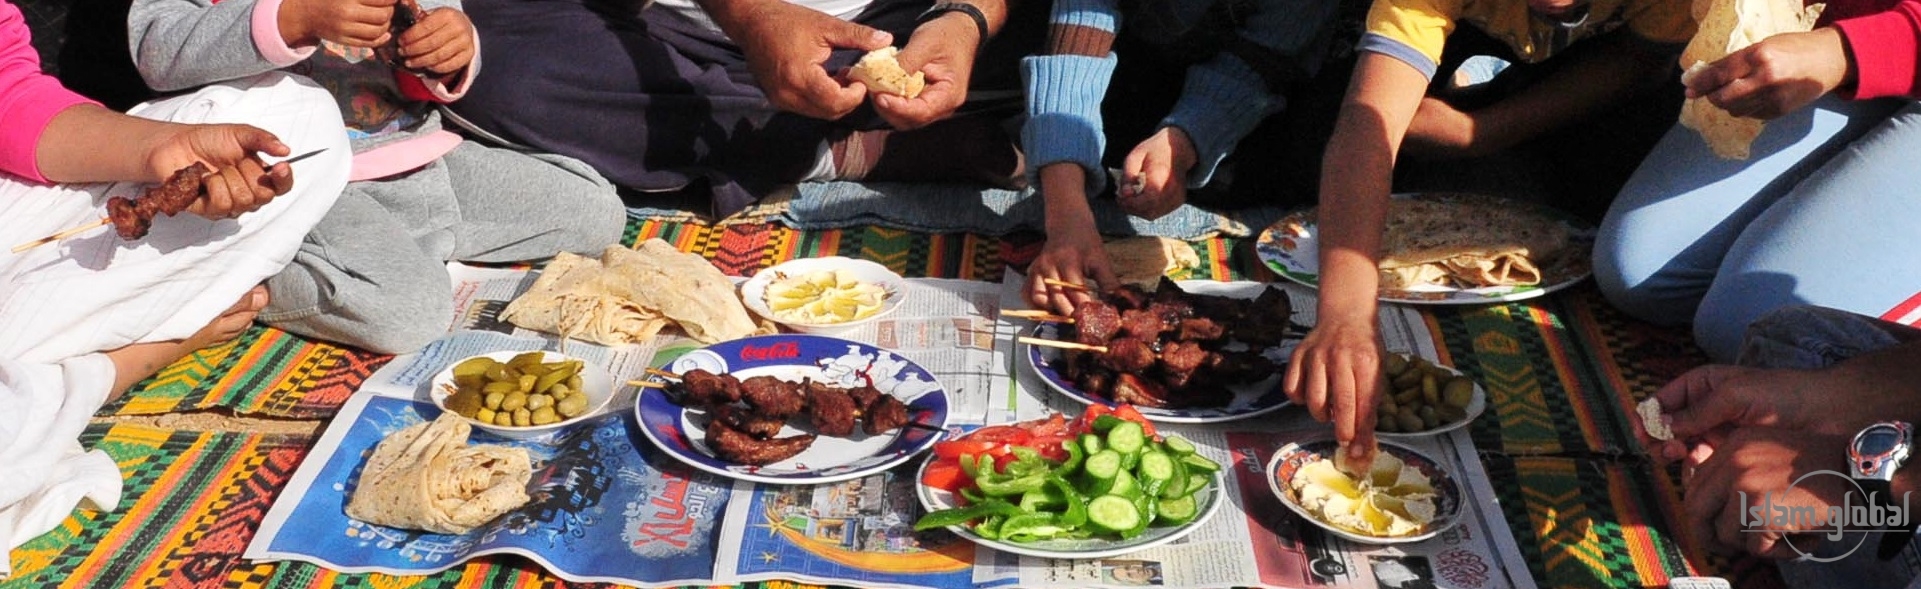 Ужин у мусульман. Трапеза мусульман. Мусульманские традиции за столом. Трапеза за столом мусульманской семьи. Еда на полу у мусульман.